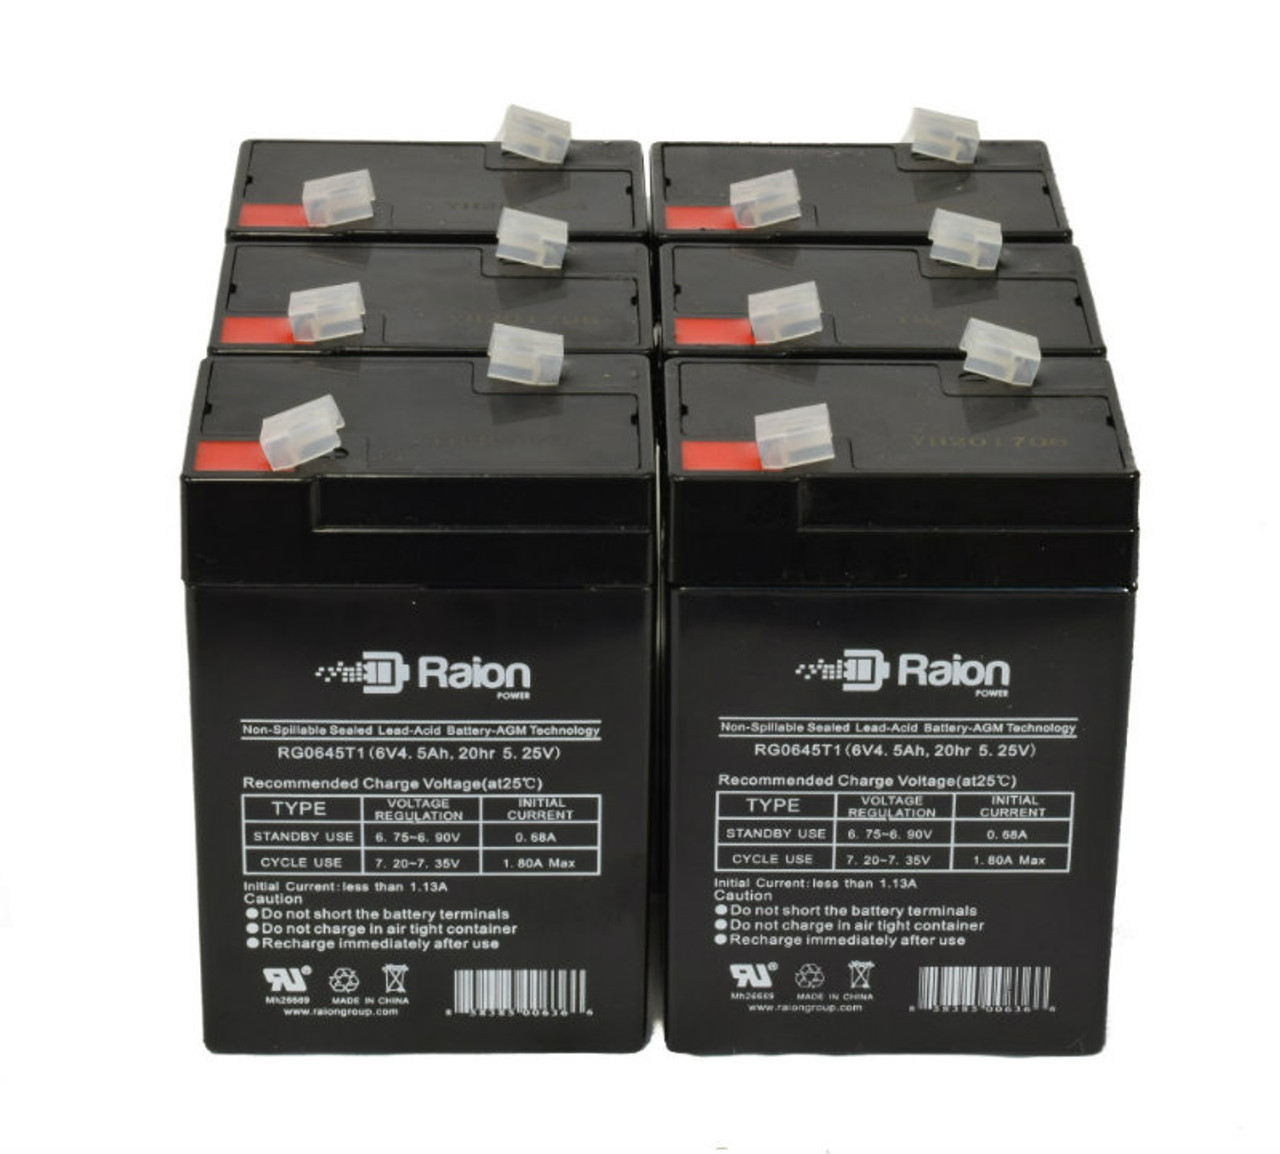 Raion Power 6 Volt 4.5Ah RG0645T1 Replacement Battery for Peak Energy PK6V4.5F1 - 6 Pack